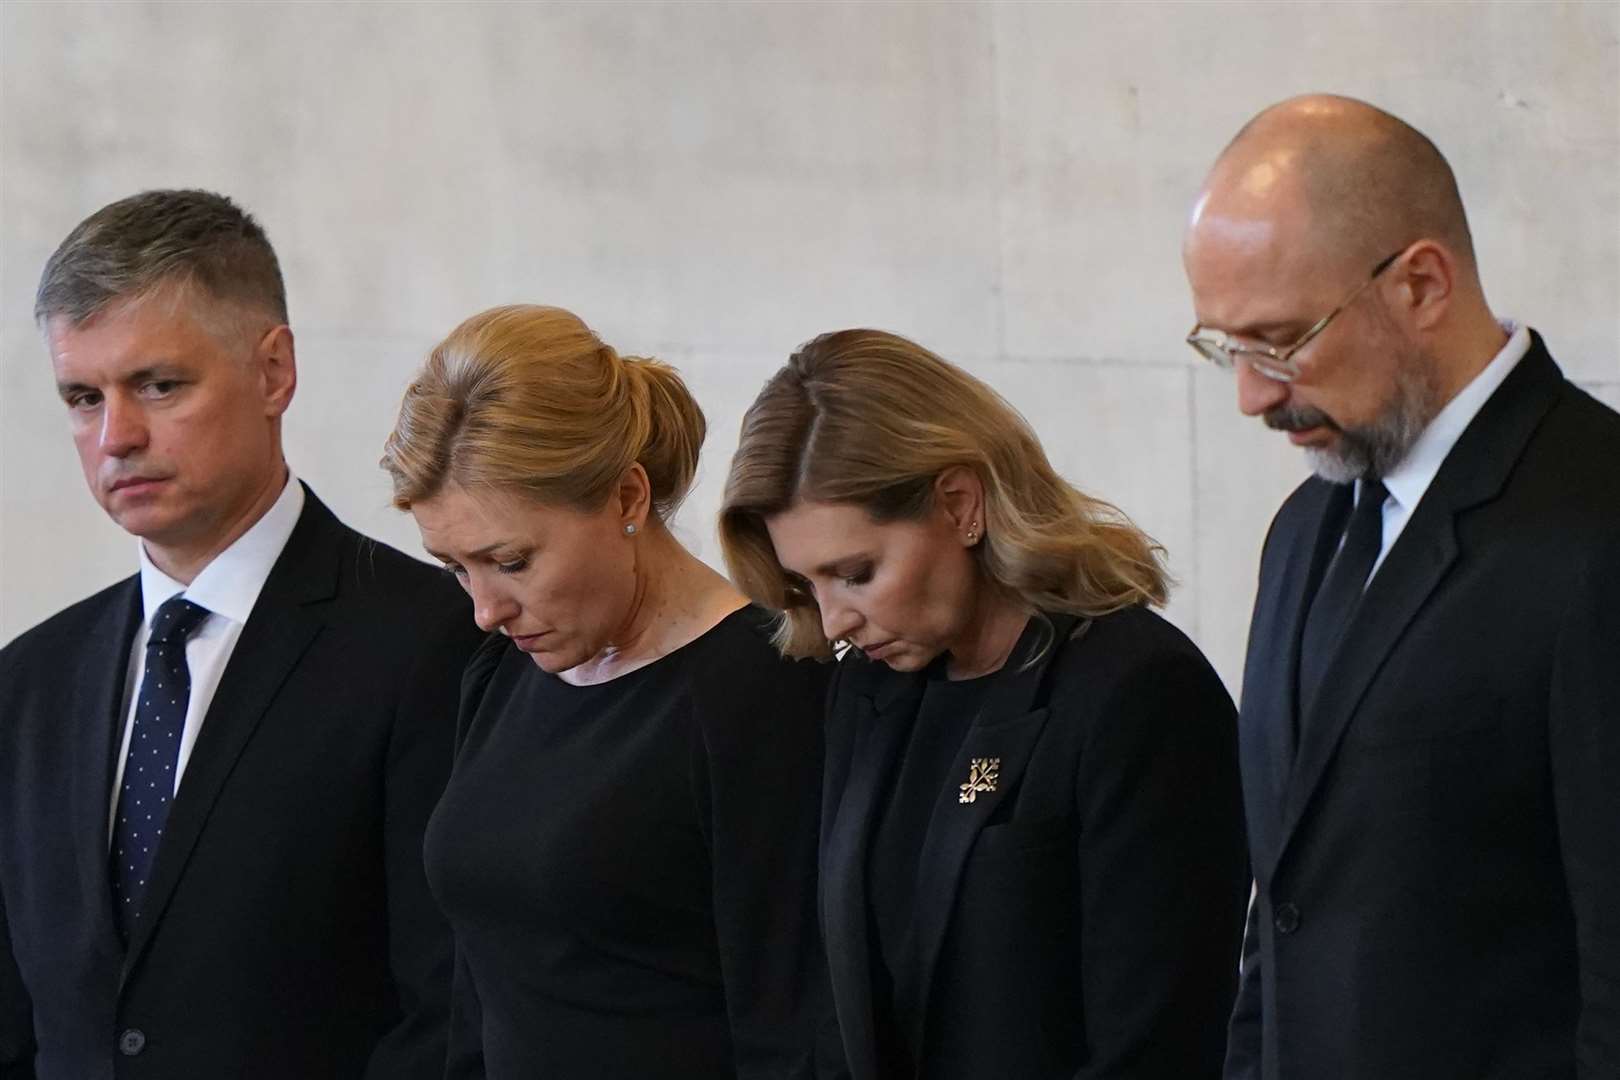 Olena Zelenska (second right) views the Queen’s coffin in Westminster Hall (Joe Giddens/PA)